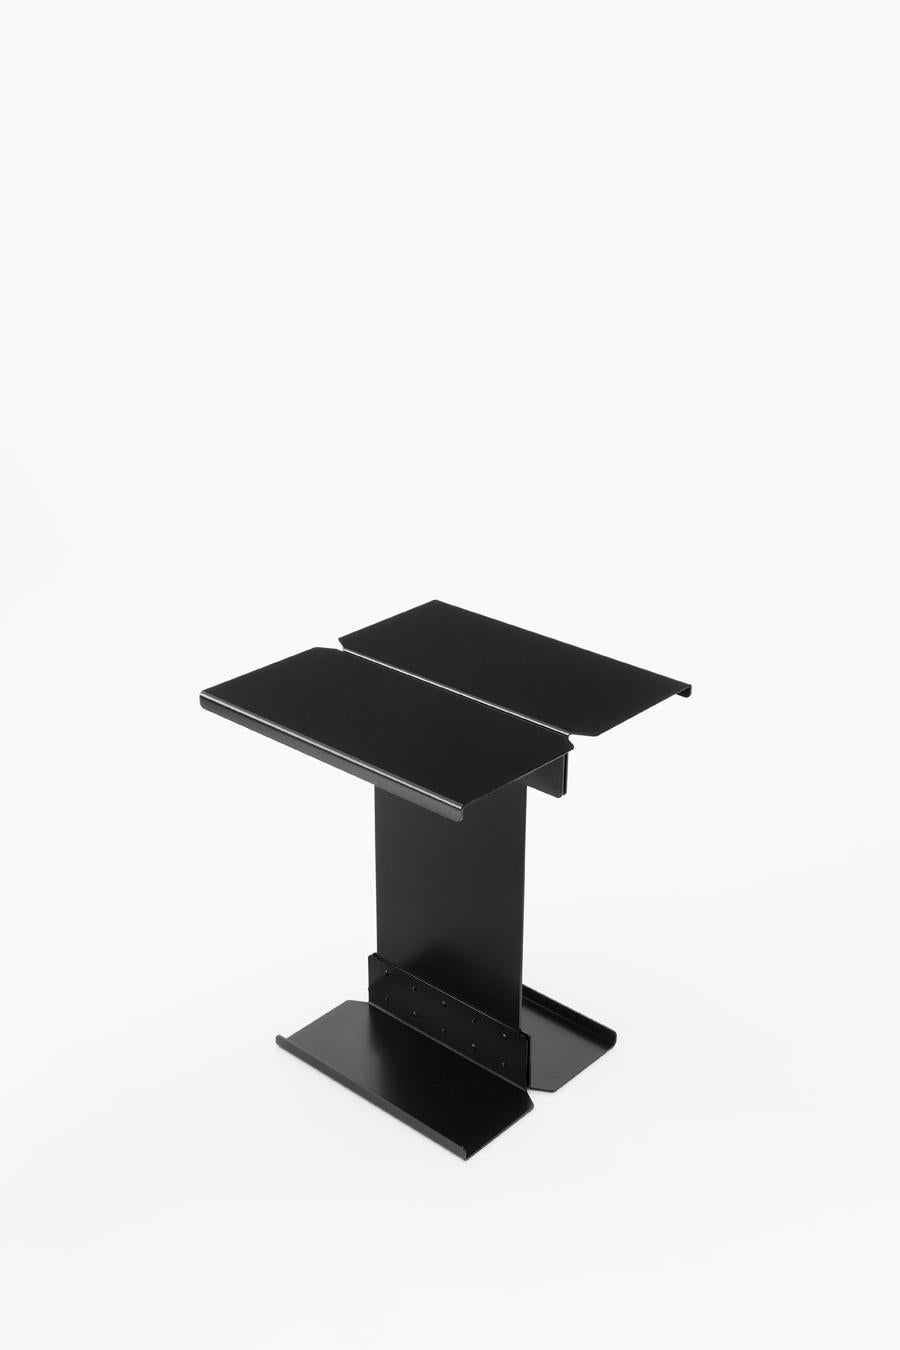 Adolfo Abejon Contemporary 'Five' White Metal Sculptural Coffee Table 1